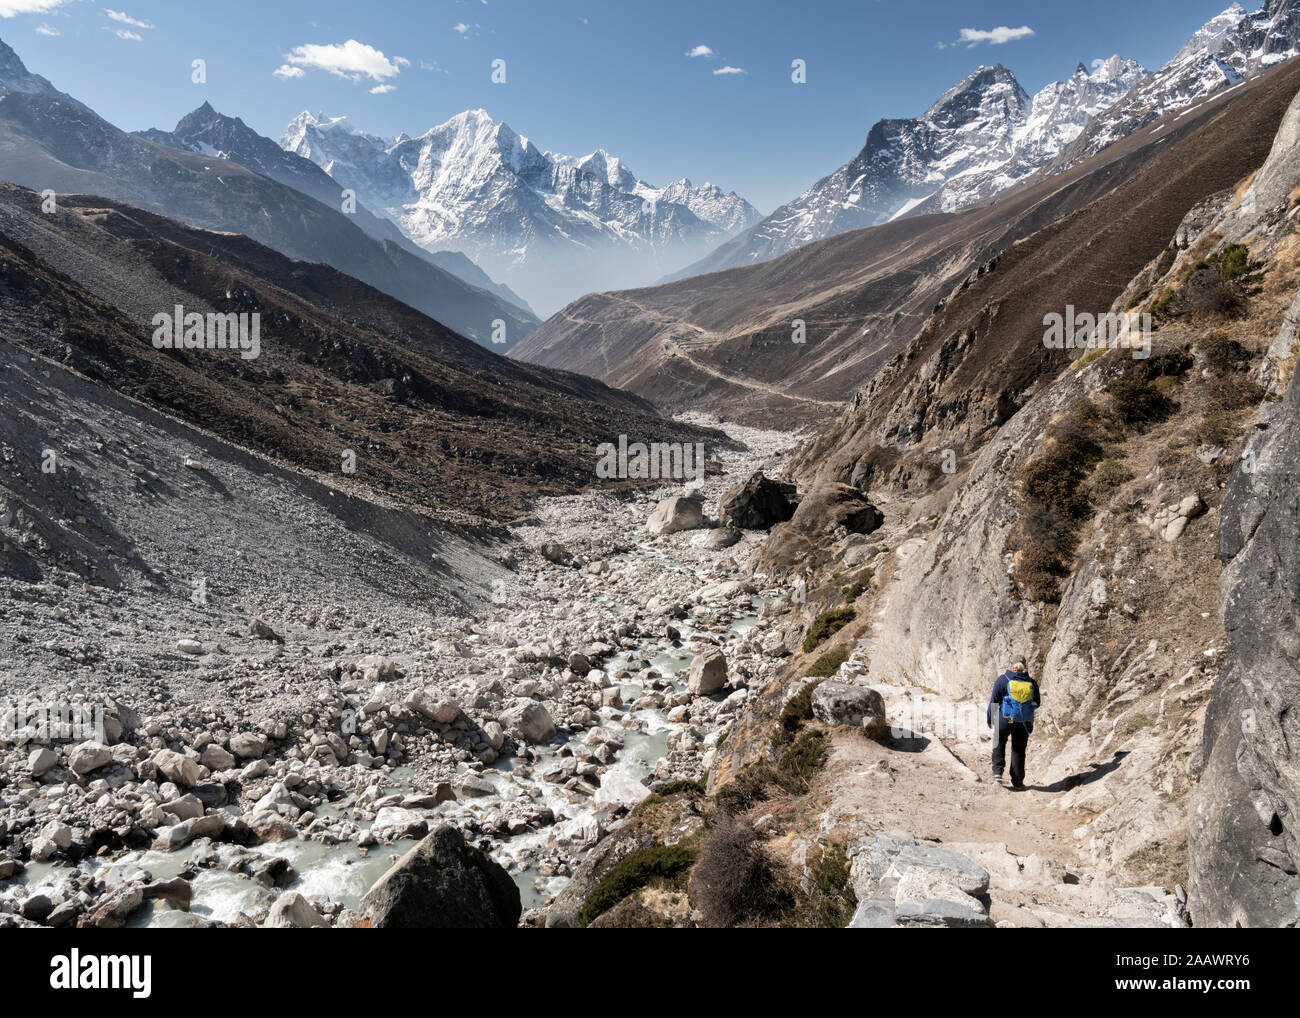 Woman trekking in the Himalayas, Nepal Stock Photo